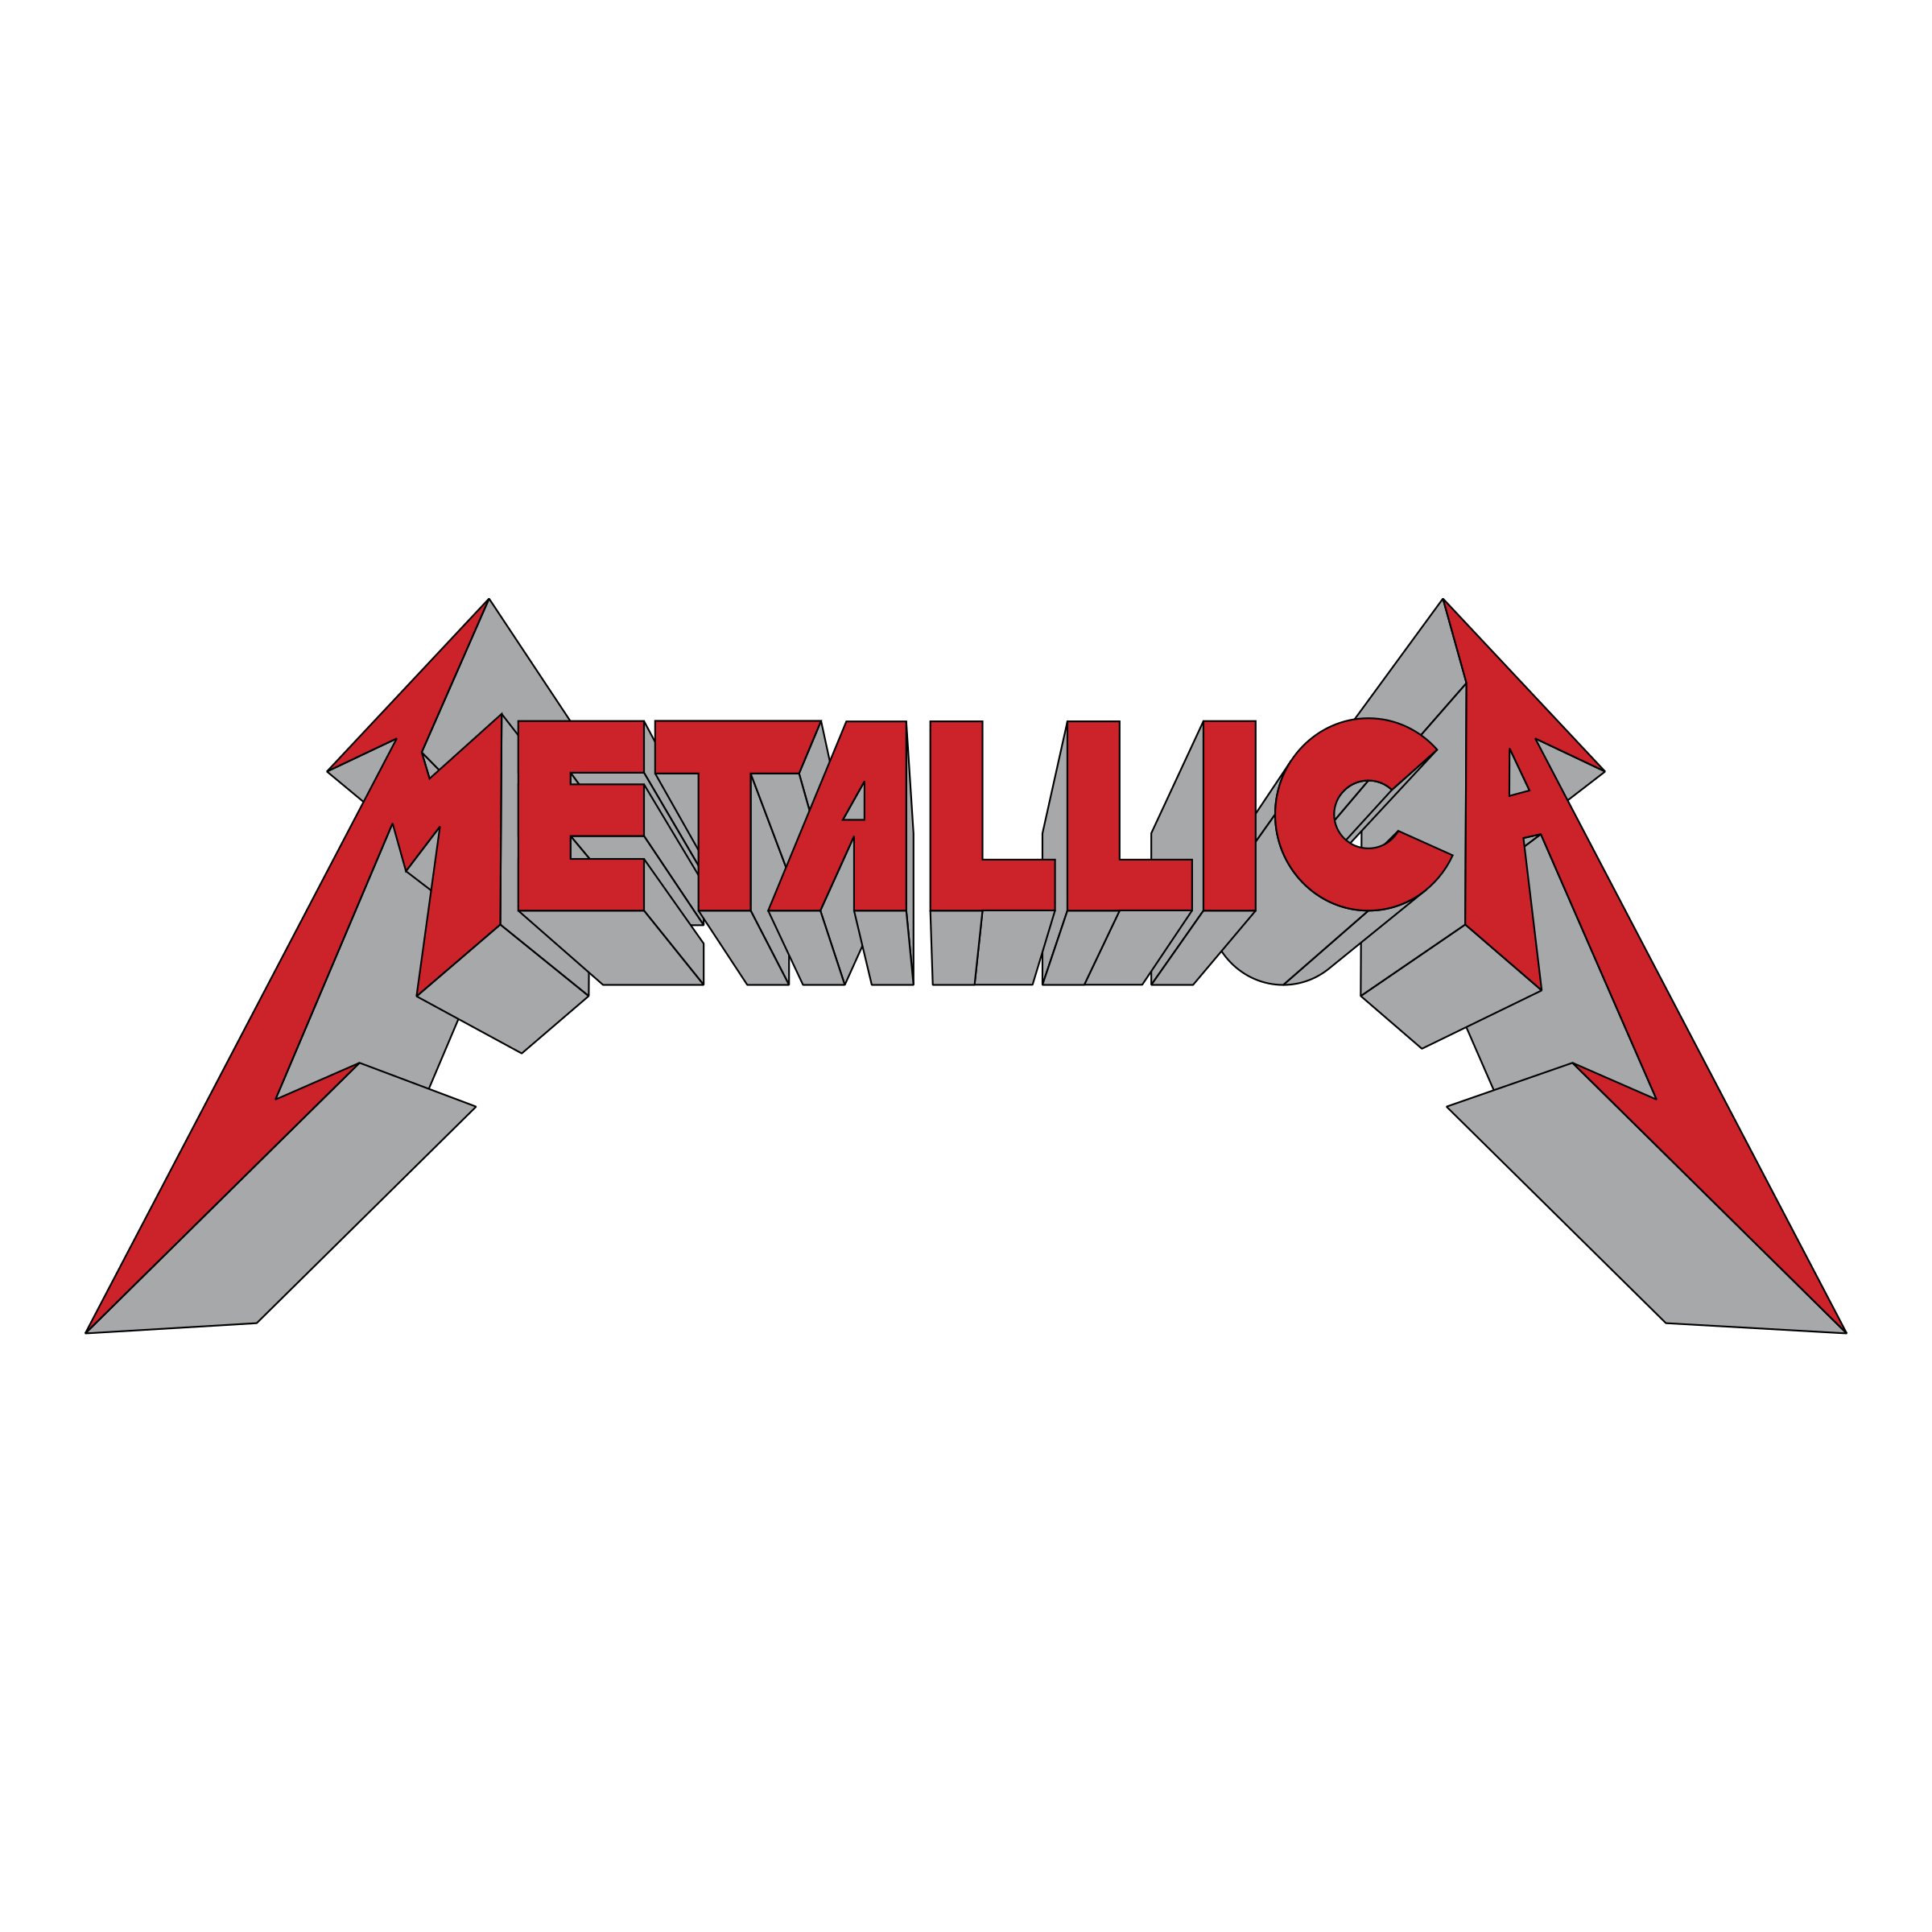 Metallica Logo - Metallica Logo PNG Transparent & SVG Vector - Freebie Supply